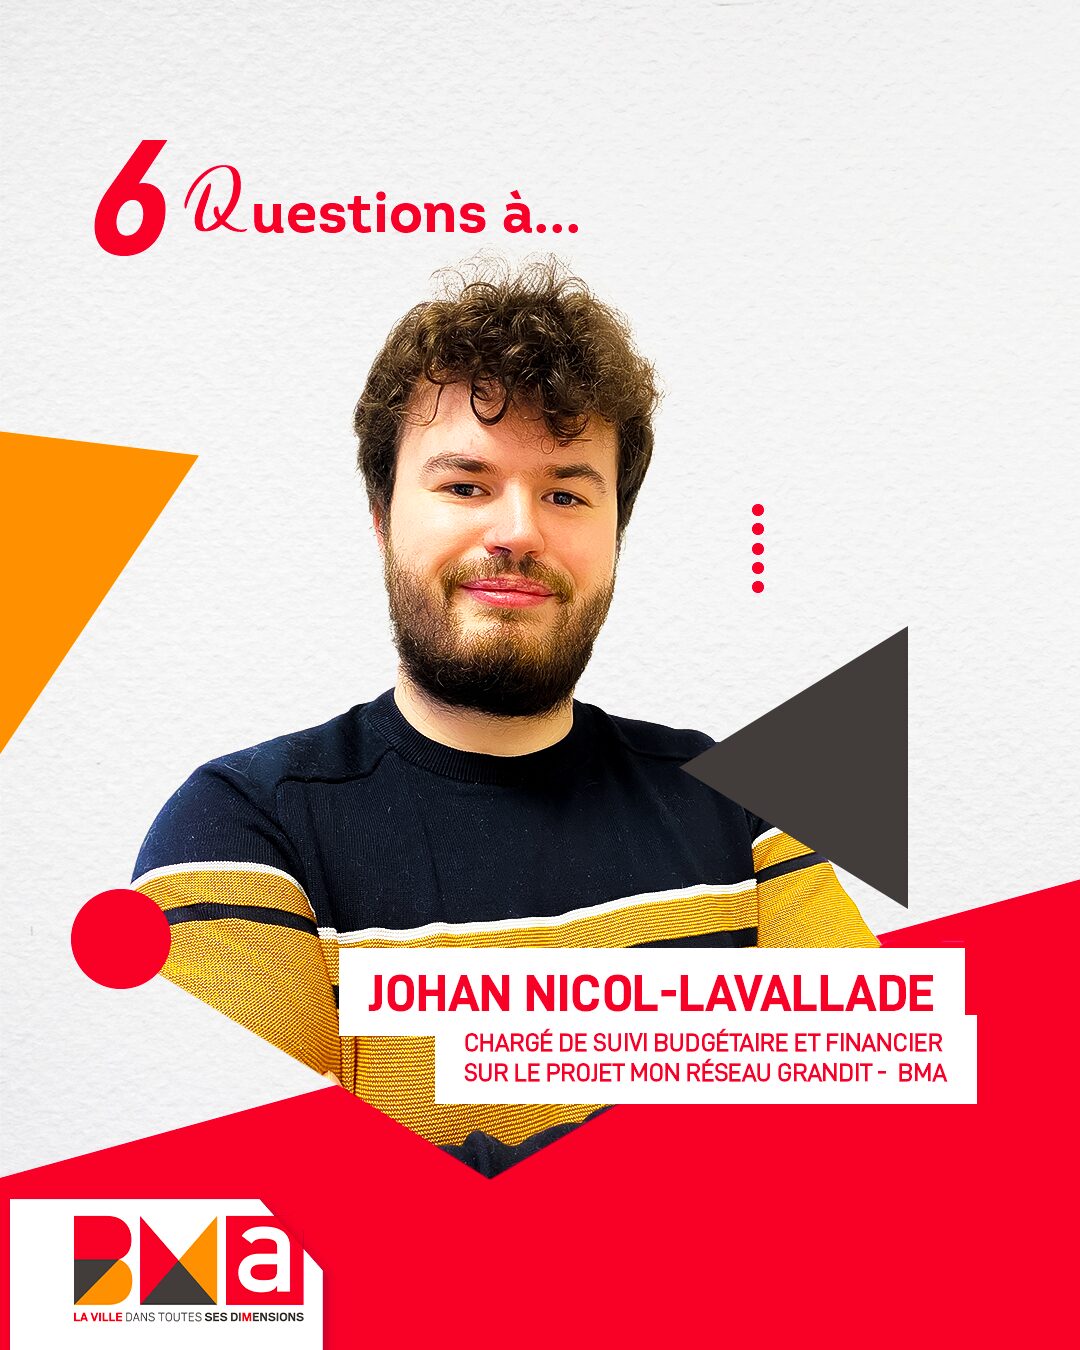 6 questions à Johan NICOL-LAVALLADE